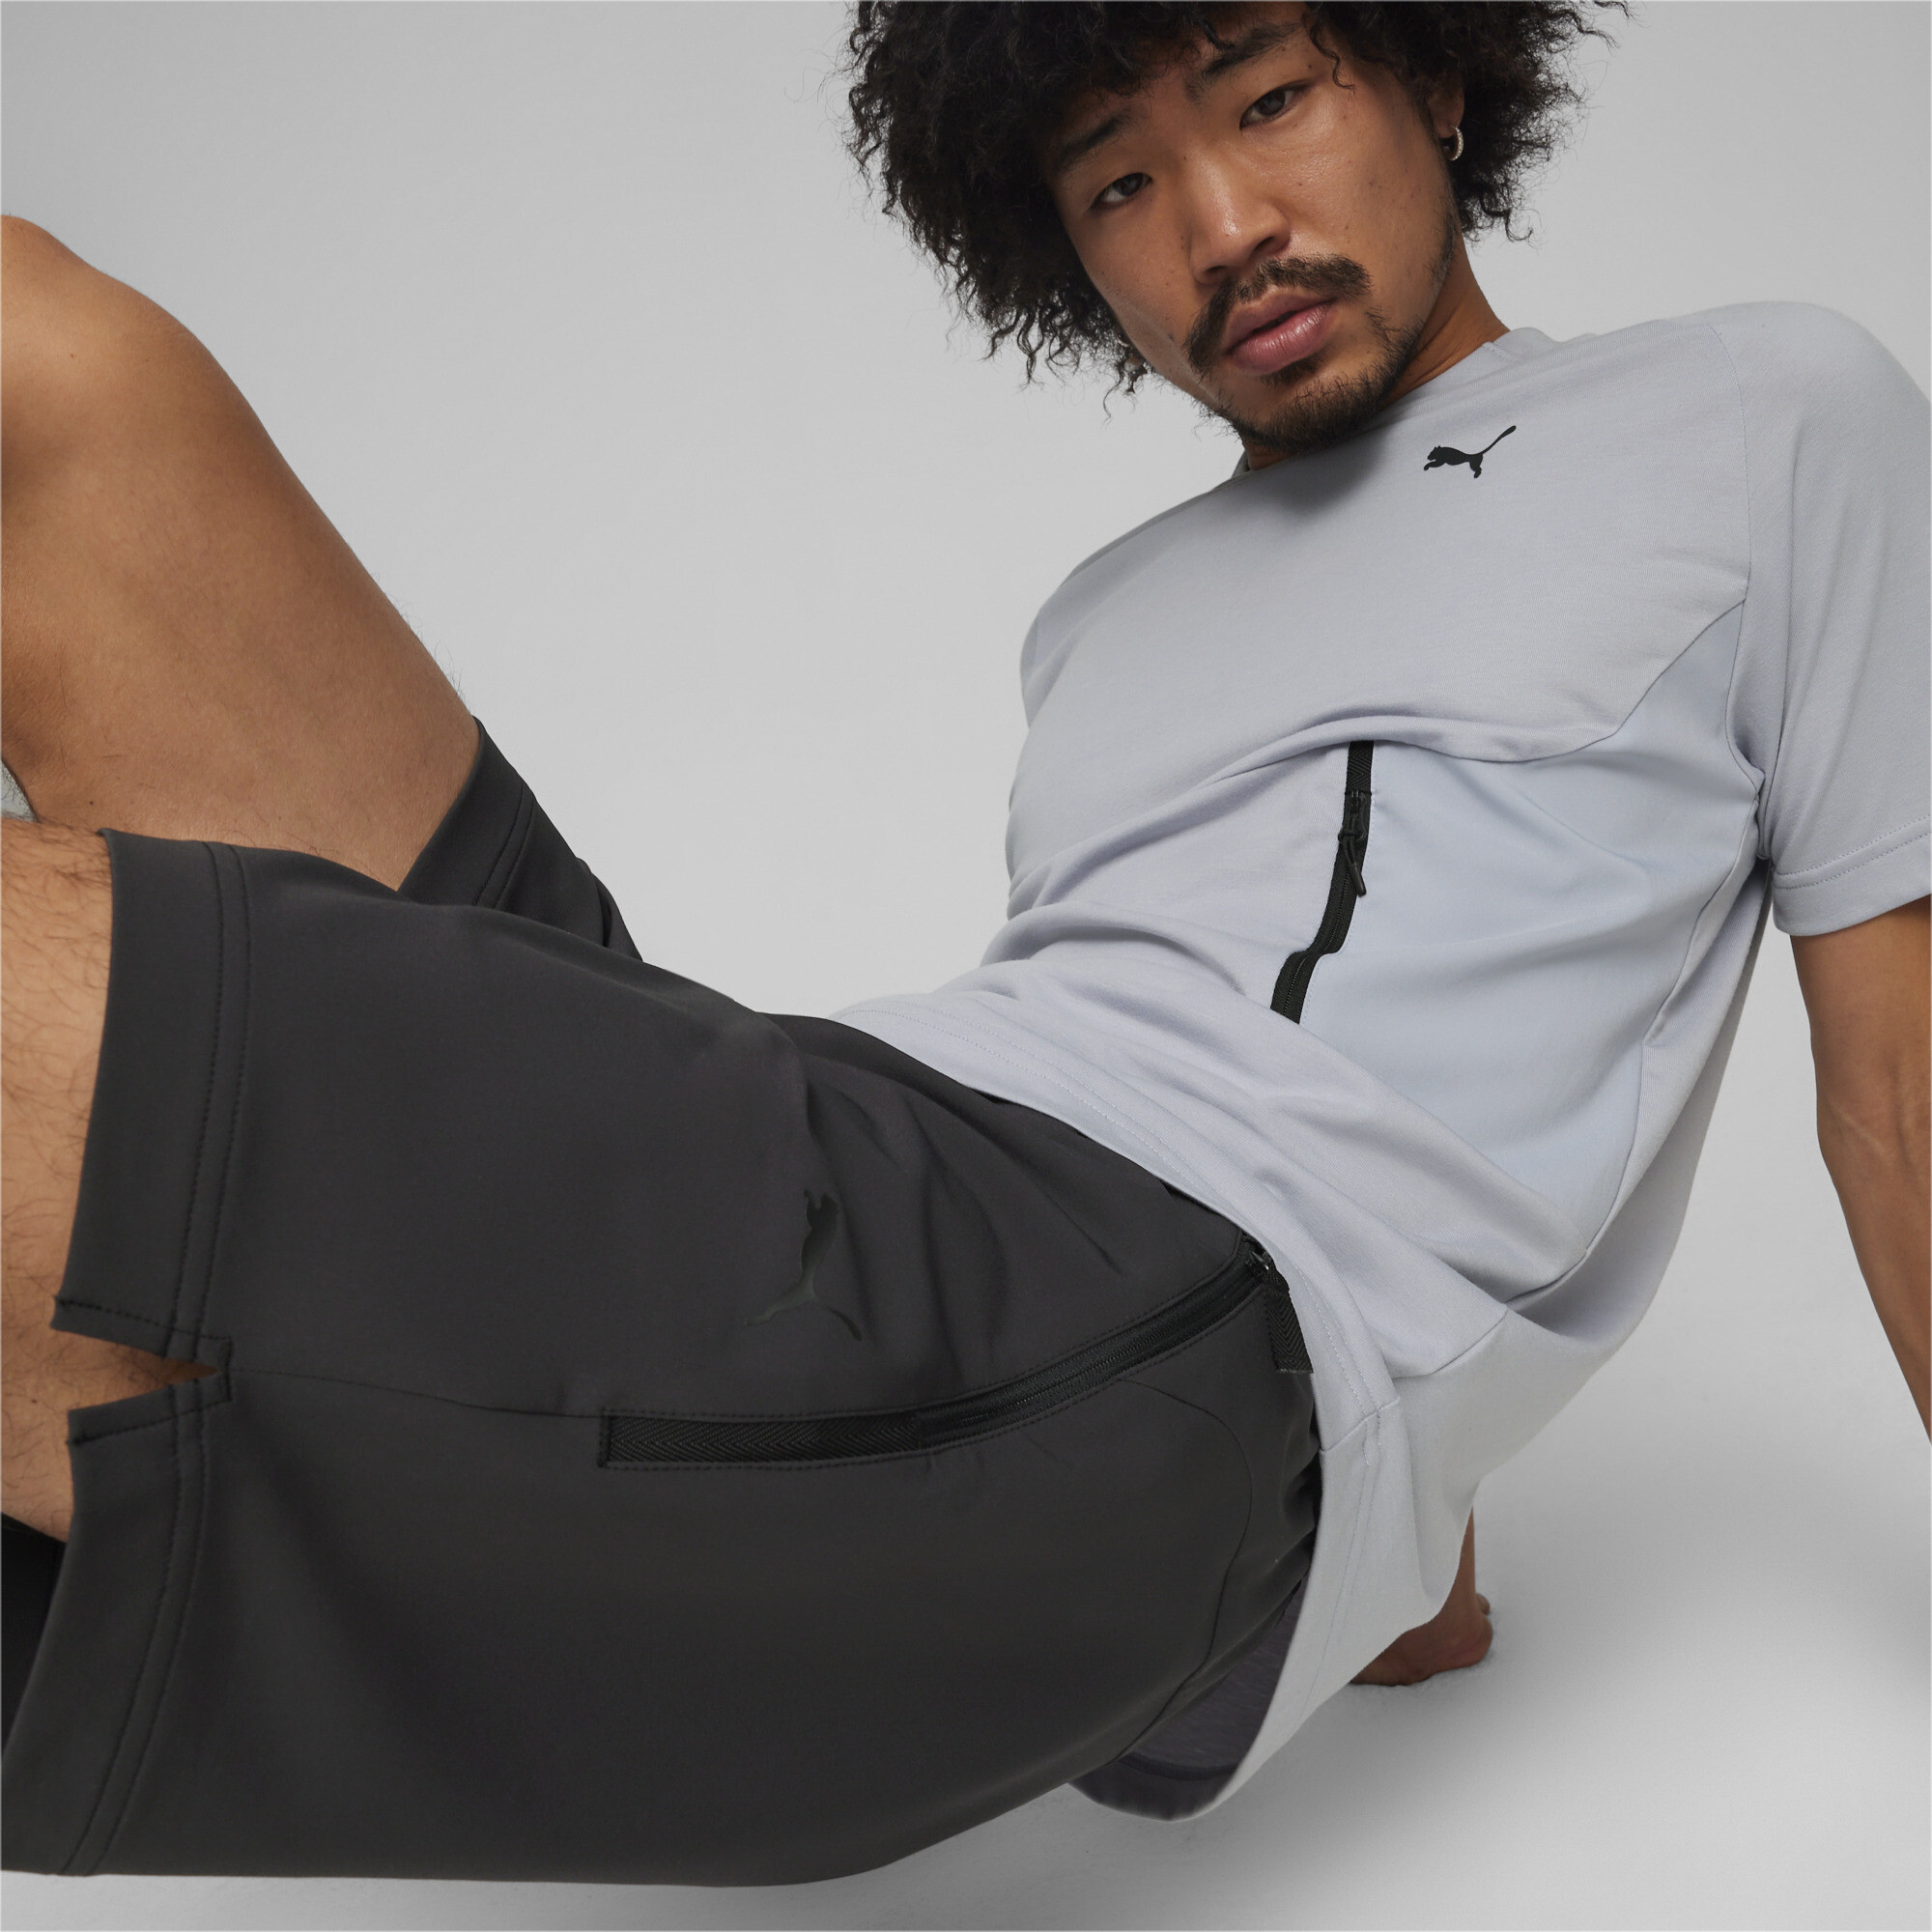 Men's PumaTECH's Shorts, Black, Size M, Clothing